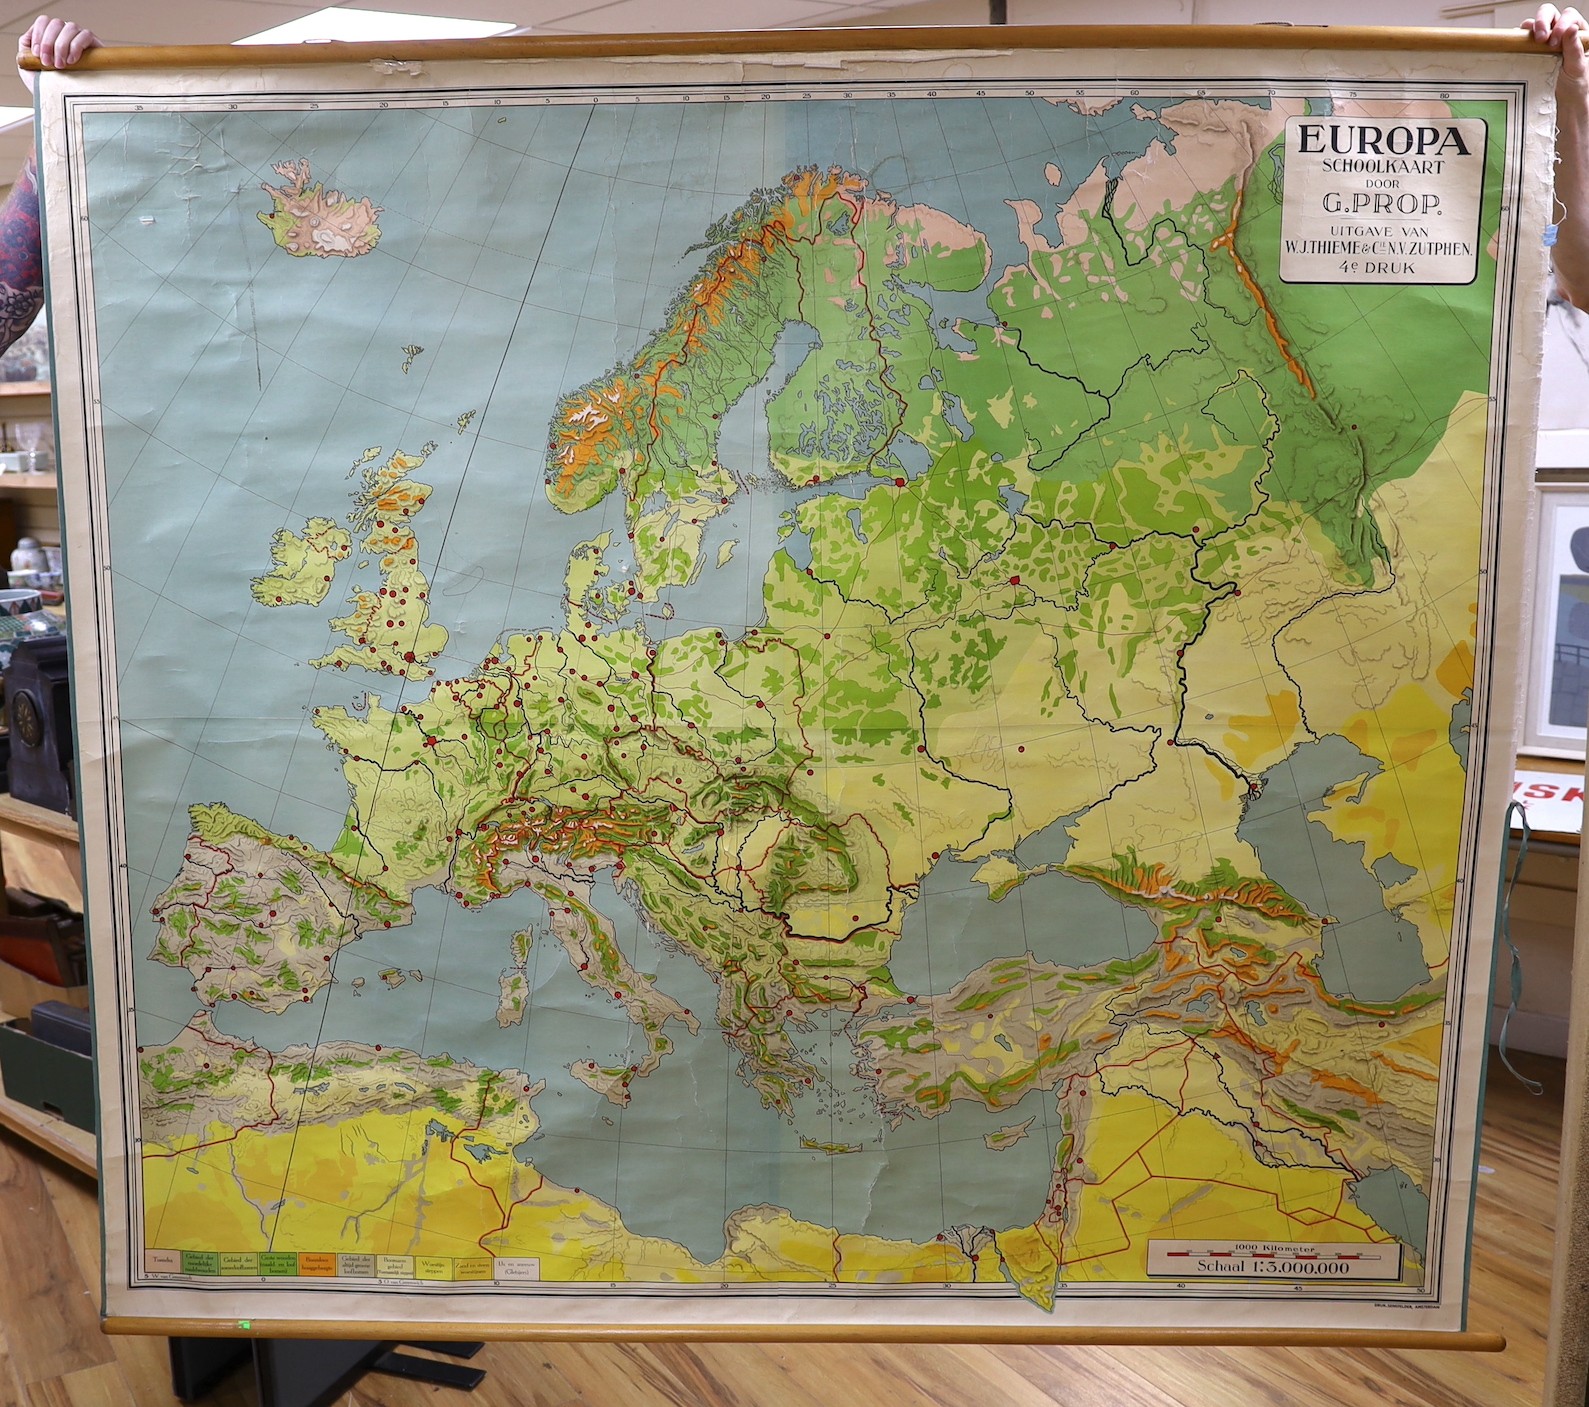 A Dutch school map of Europe, 200cm wide